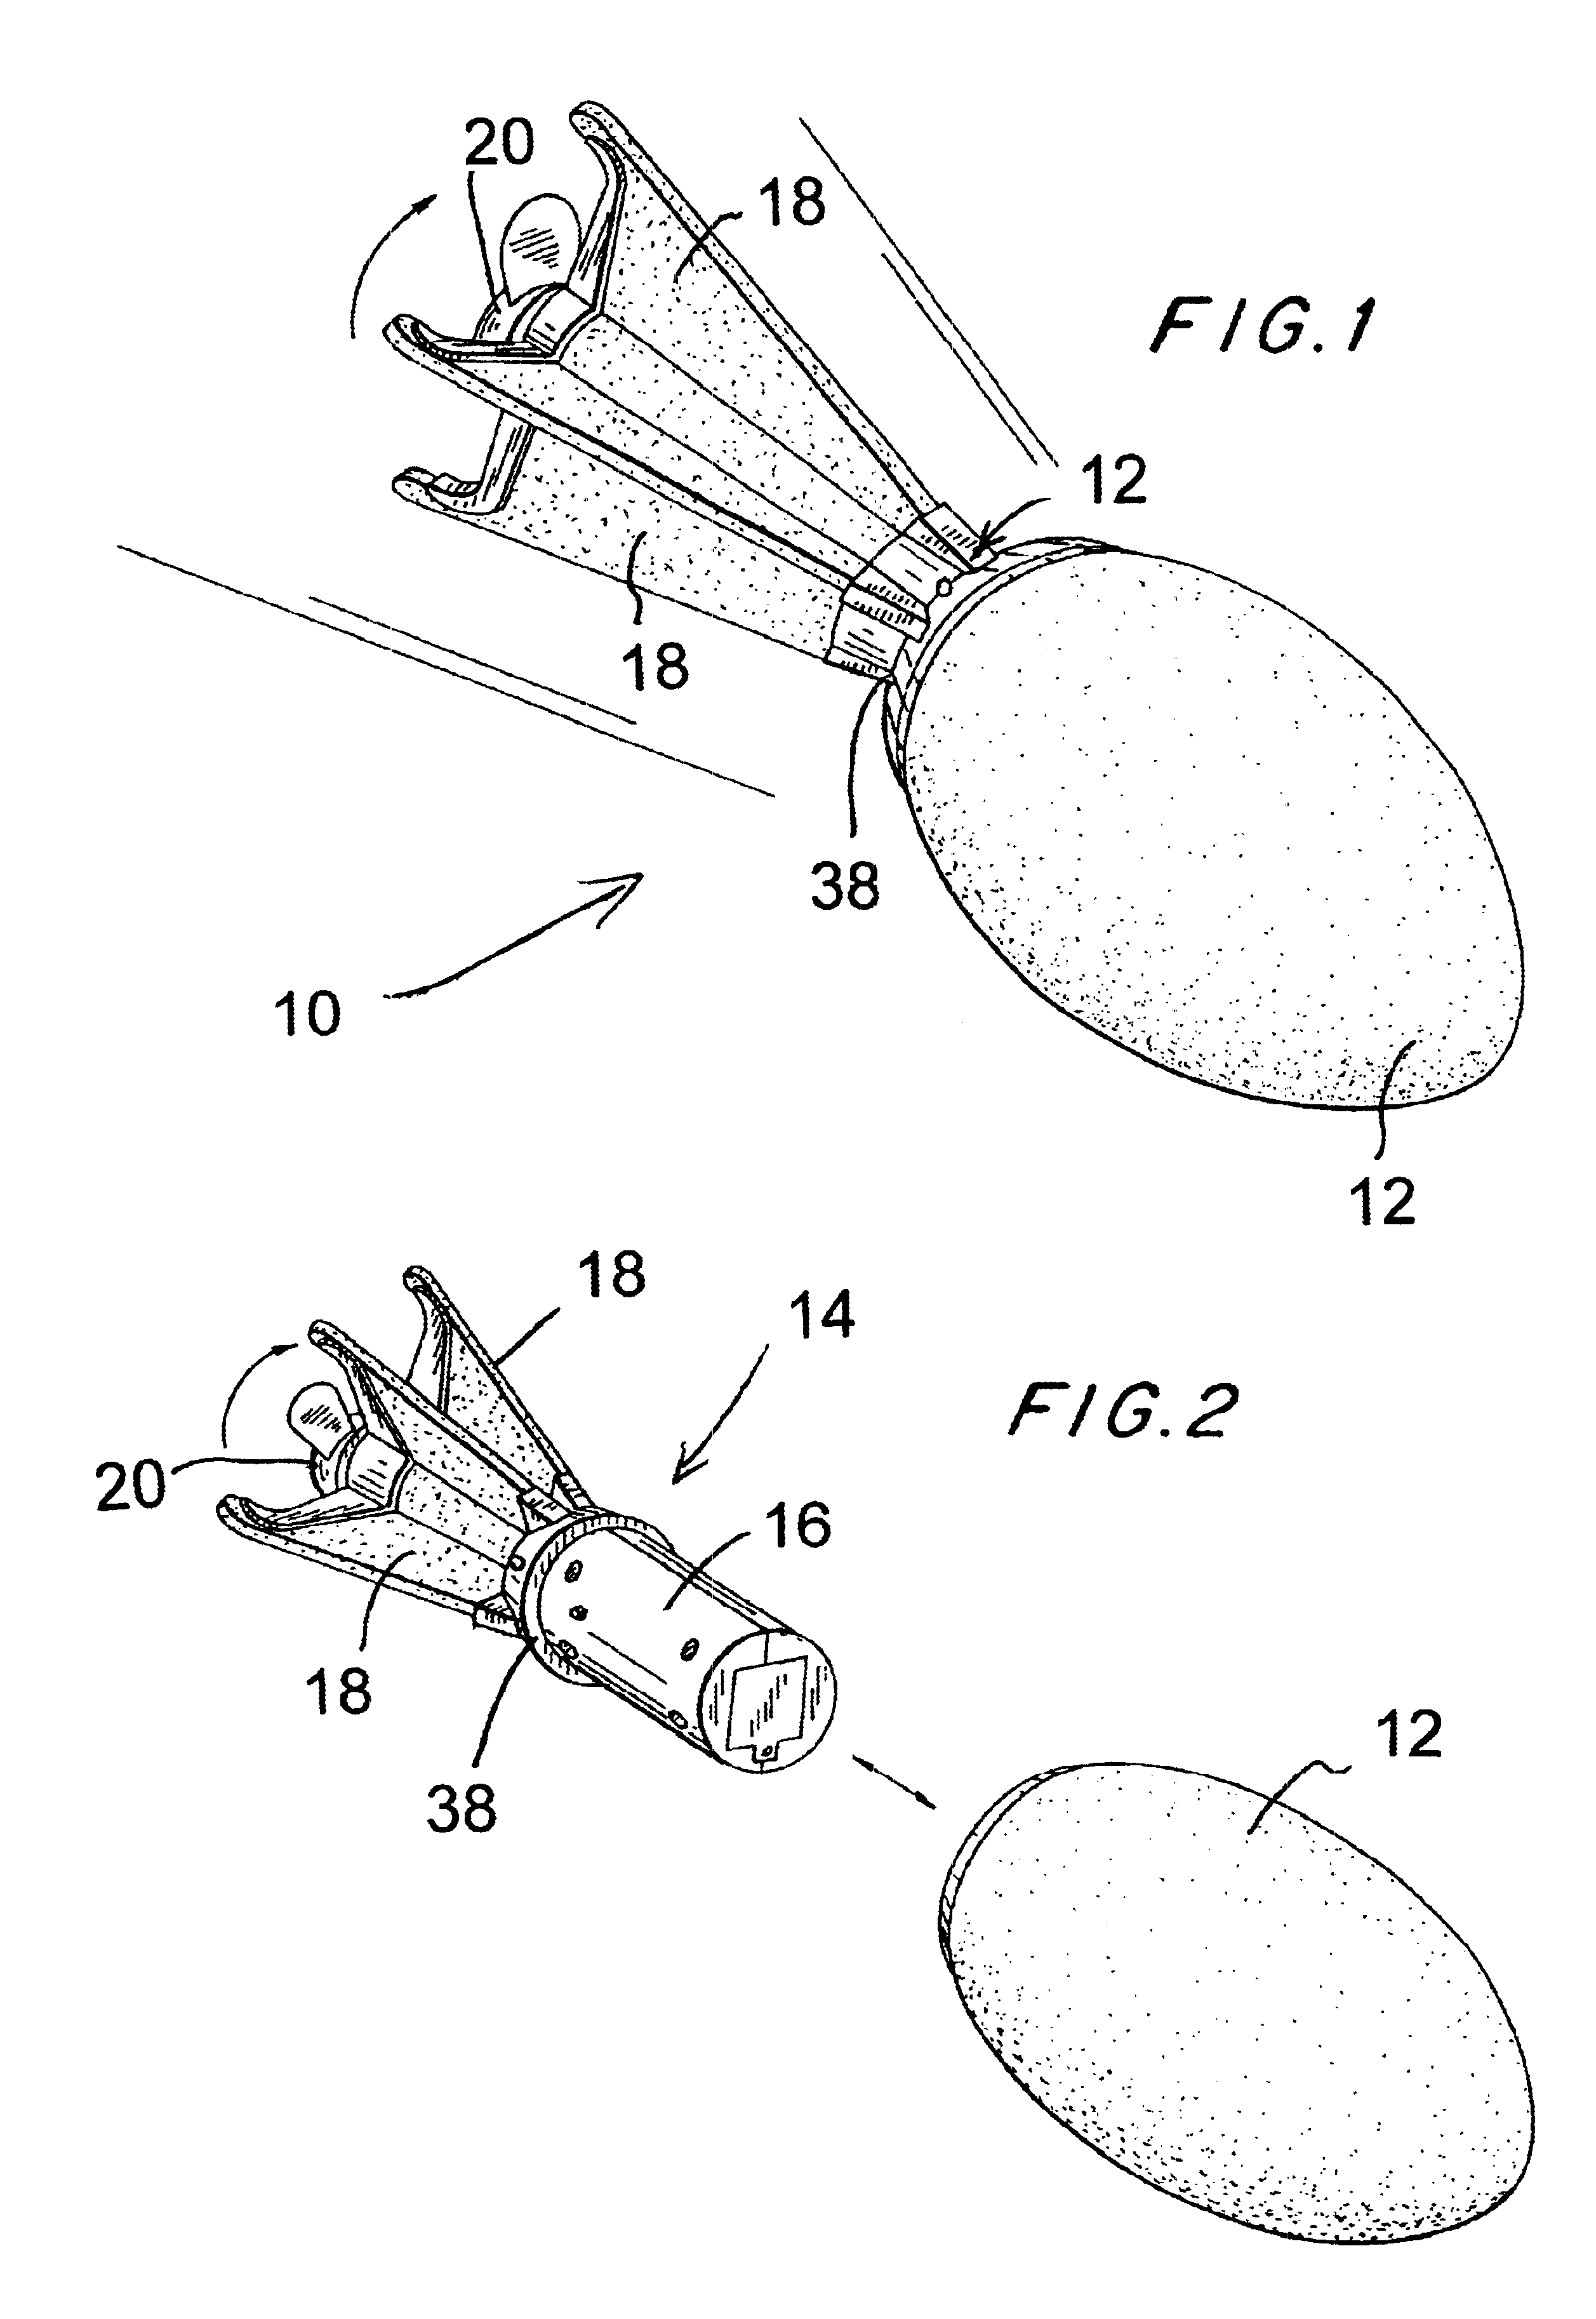 Propeller enhanced toy football